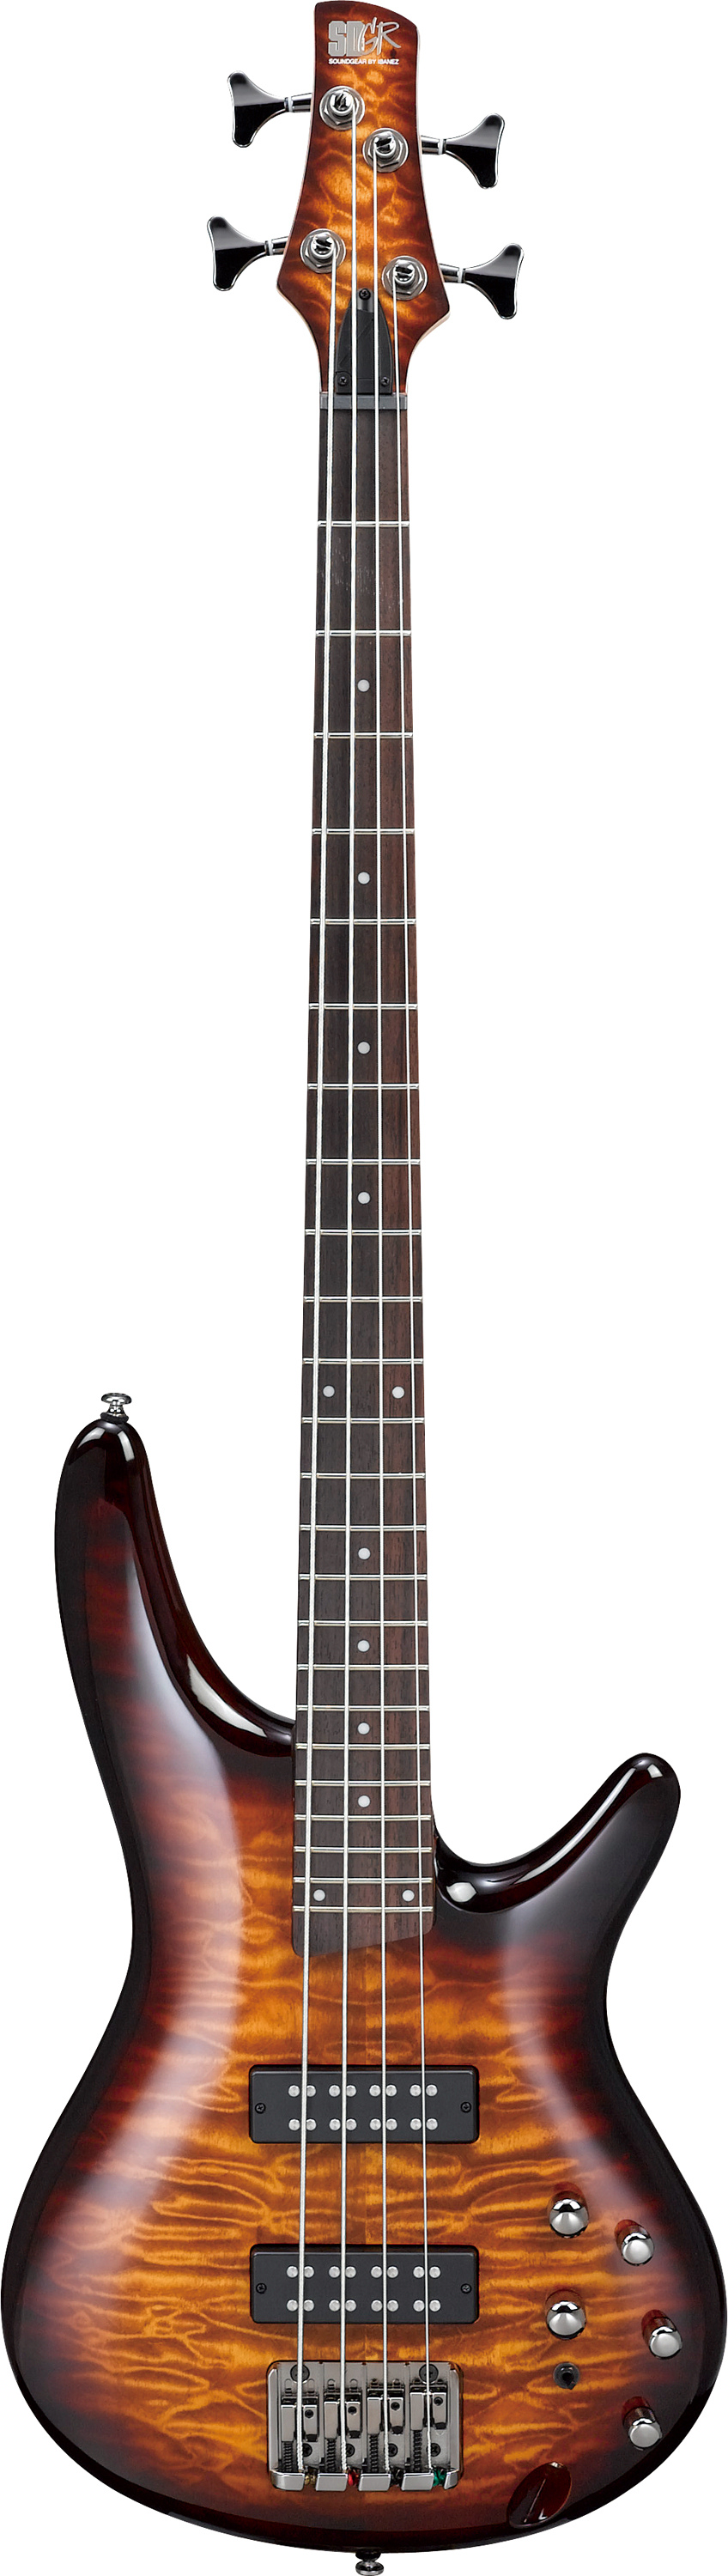 Ibanez SR400EQM 4-String Bass Guitar, 24-Fret, Jatoba Fretboard with White Dot Inlay - Dragon Eye Burst for sale